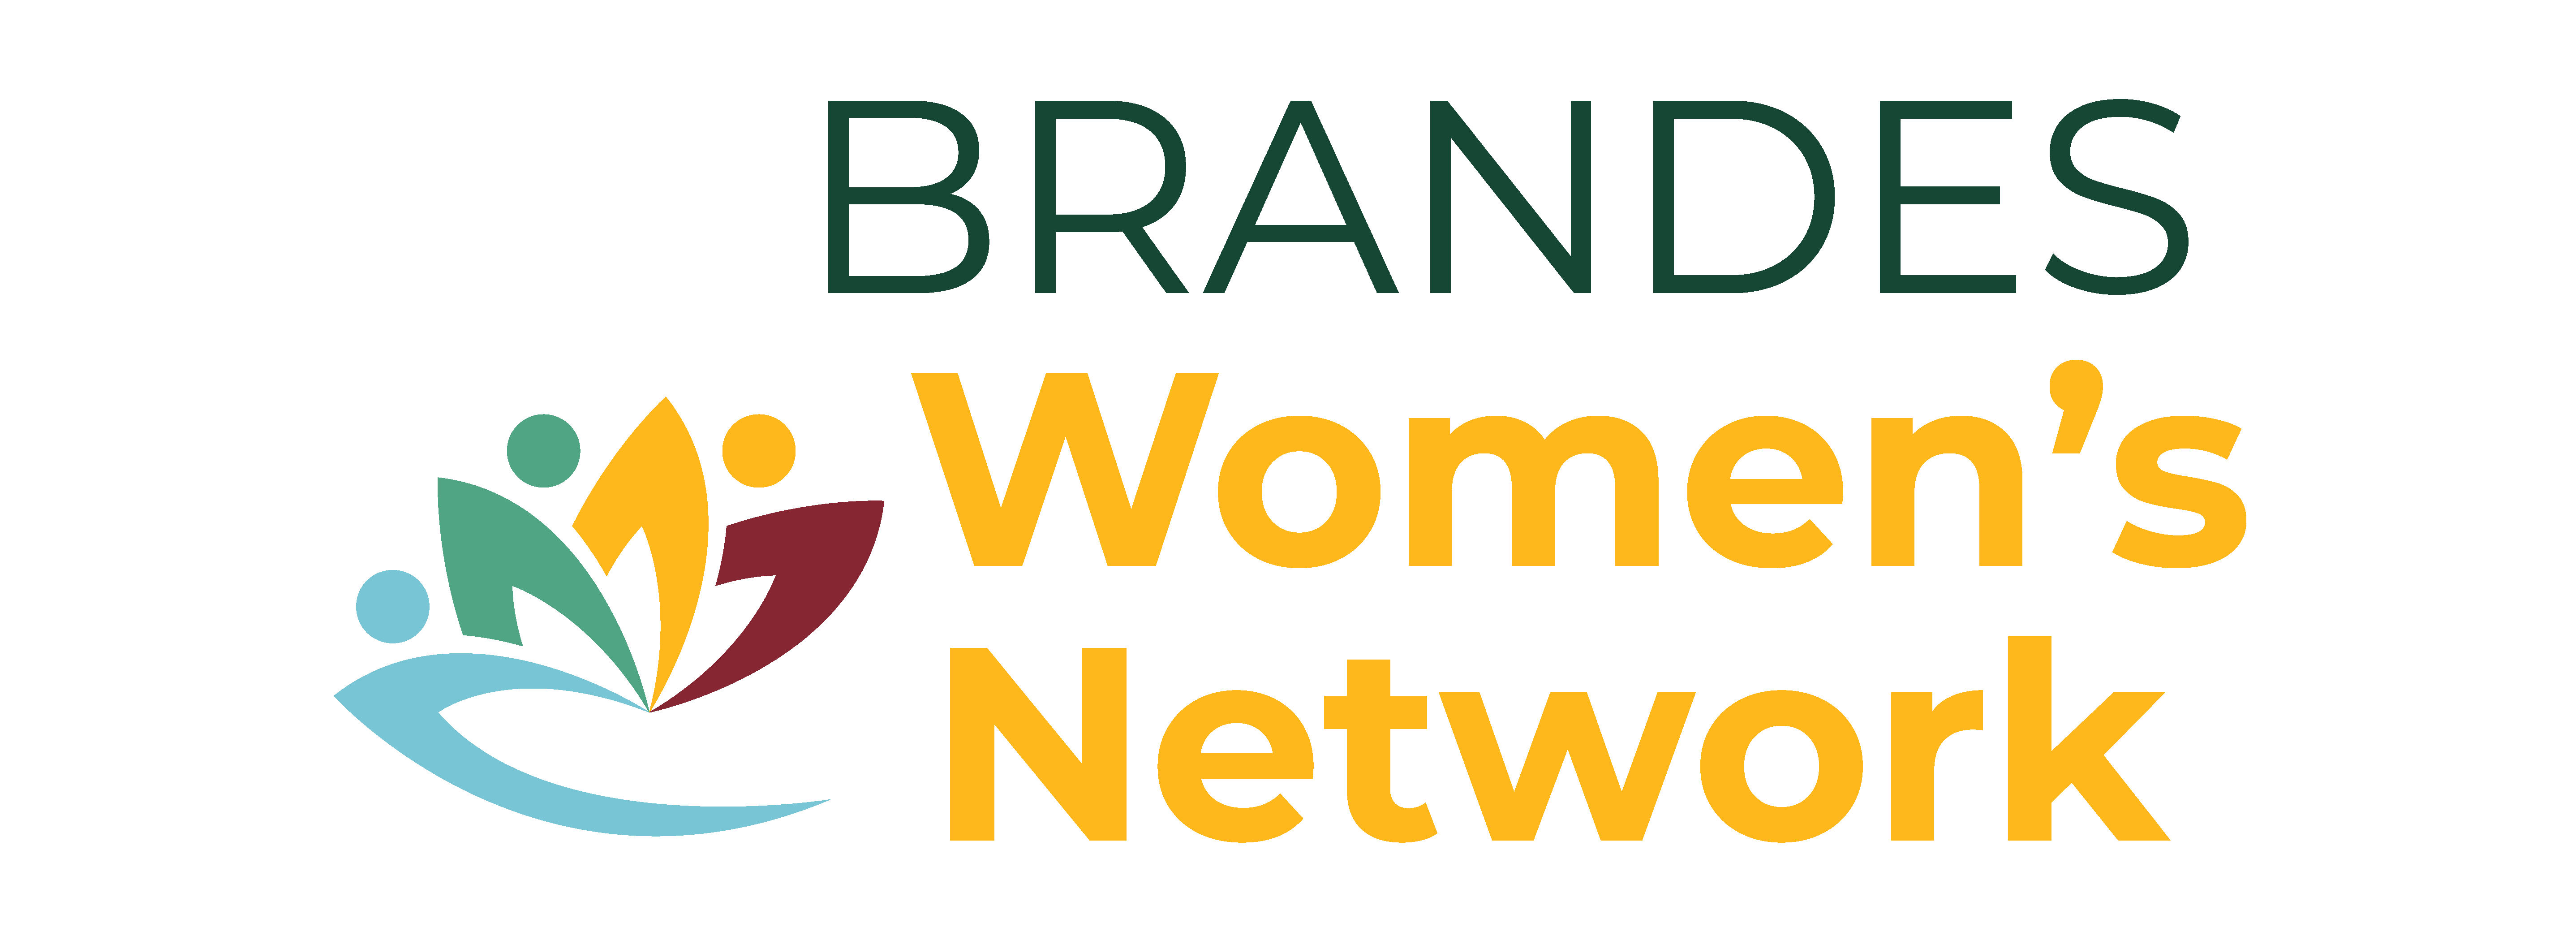 Brandes Womens Network